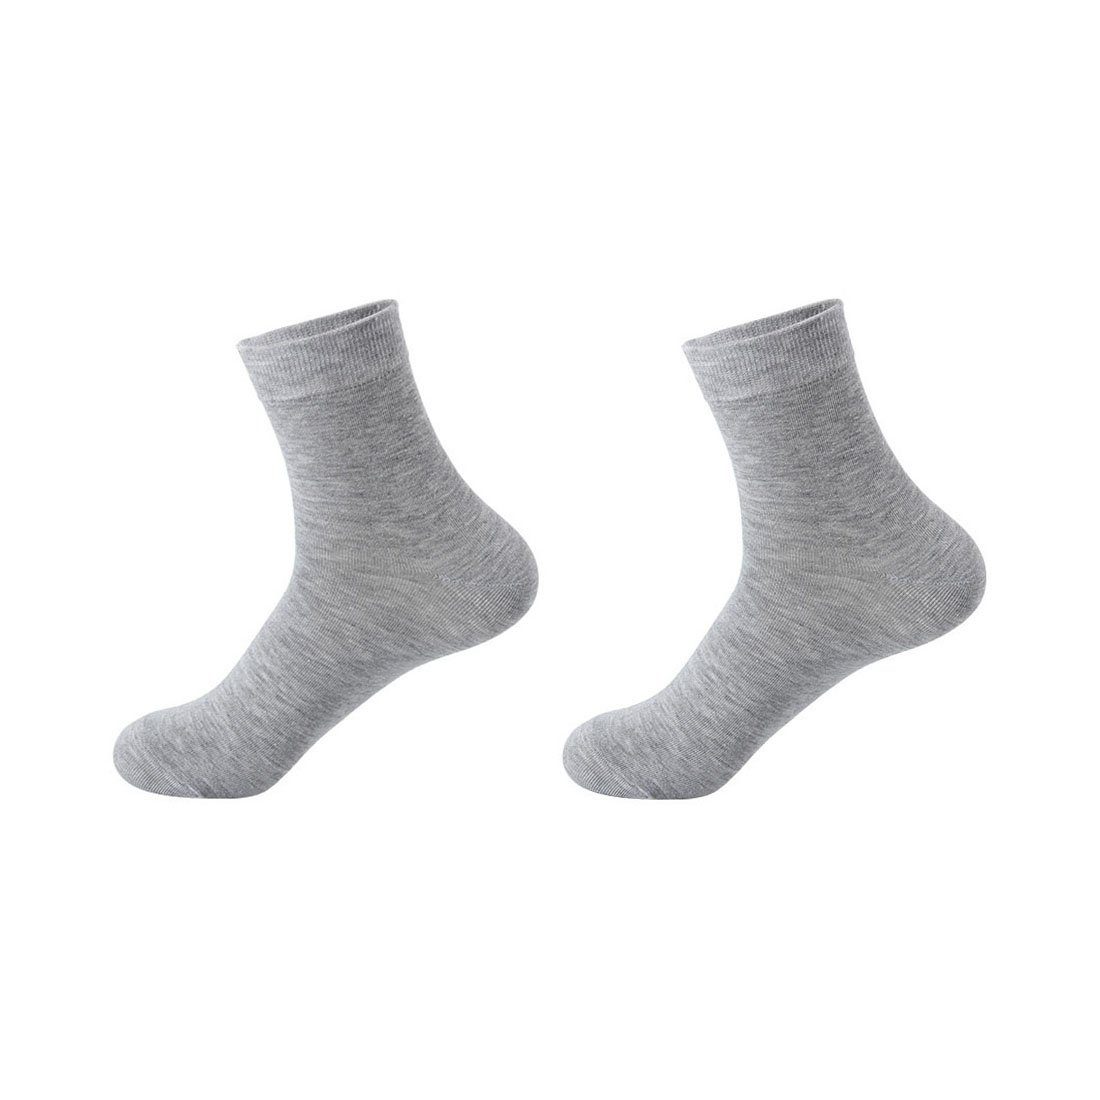 GelldG Strümpfe Premium Business Socken Herren Damen gekämmte Socken Grau